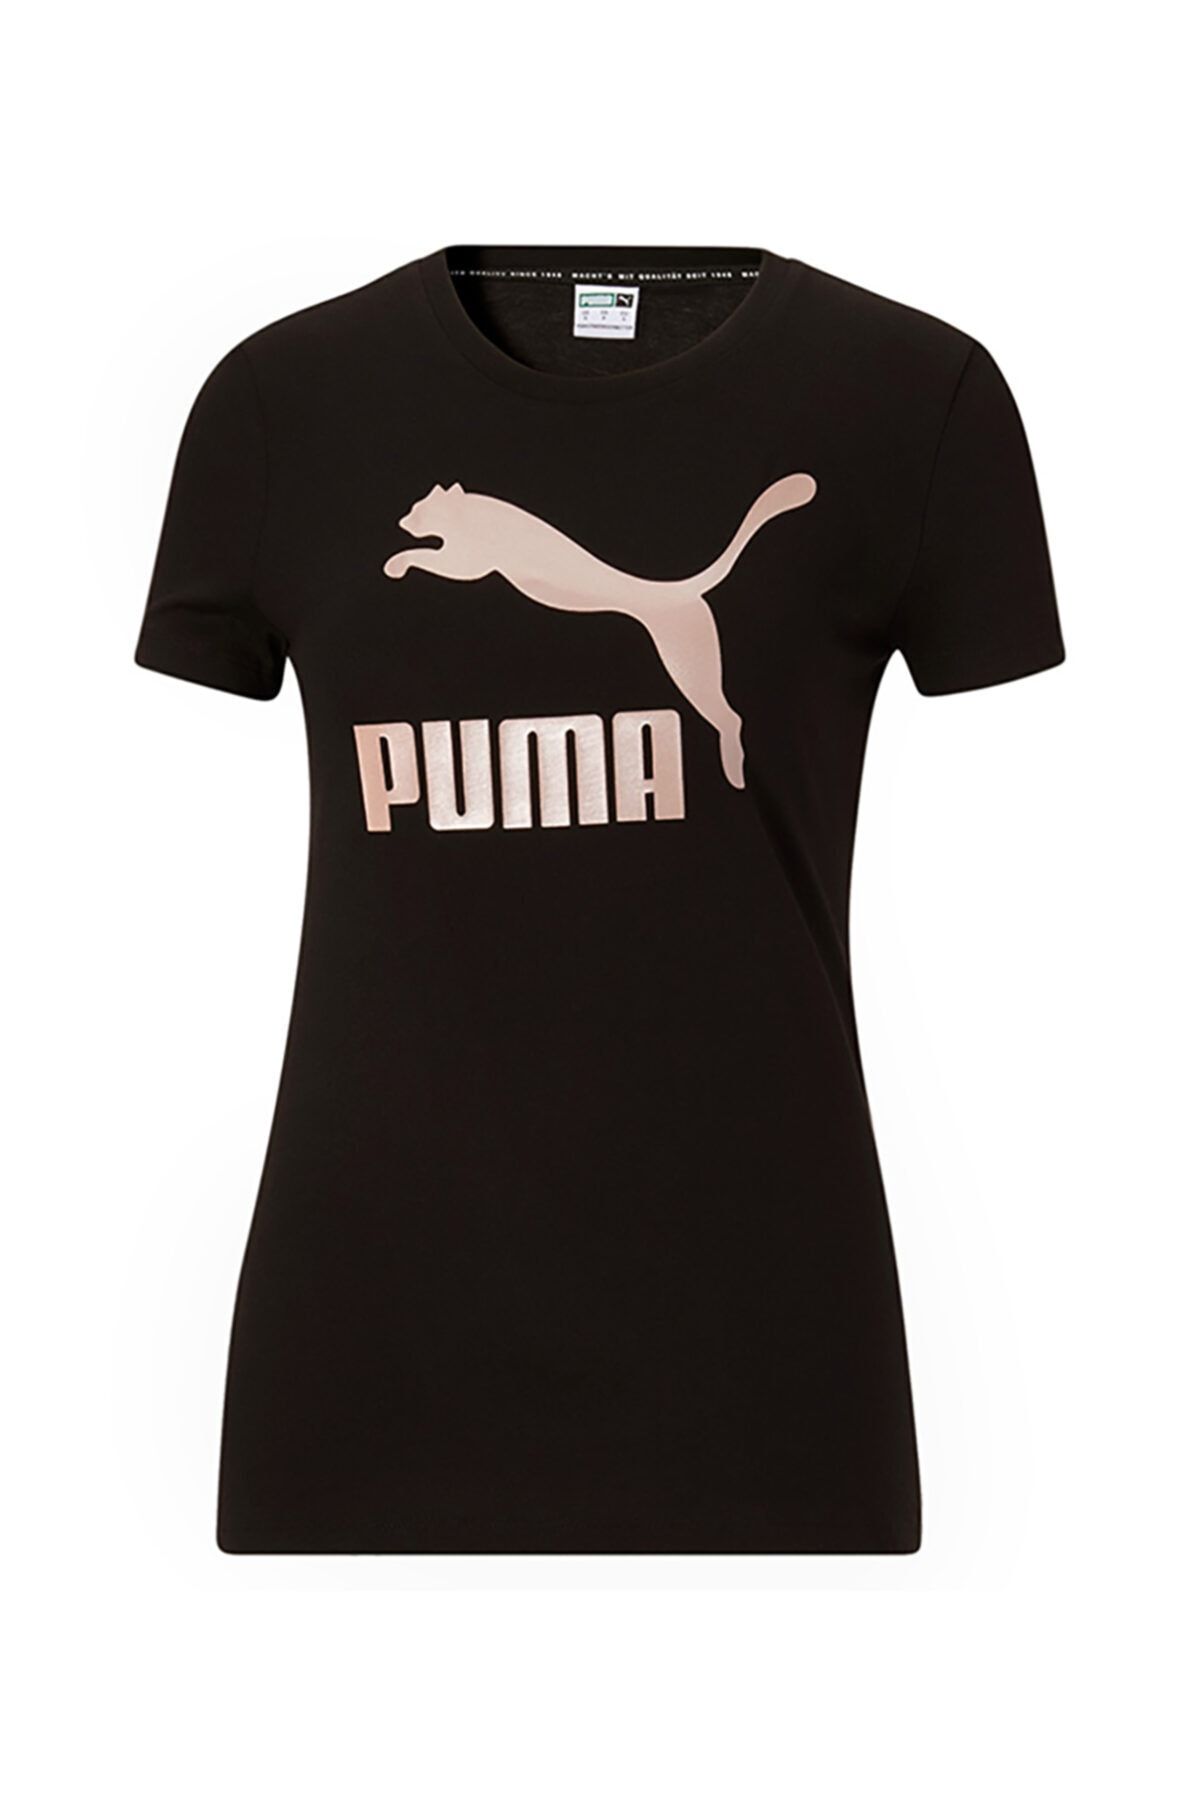 Puma Classics Metallic Logo Women\'s - T-shirt Trendyol Short Sleeve Black